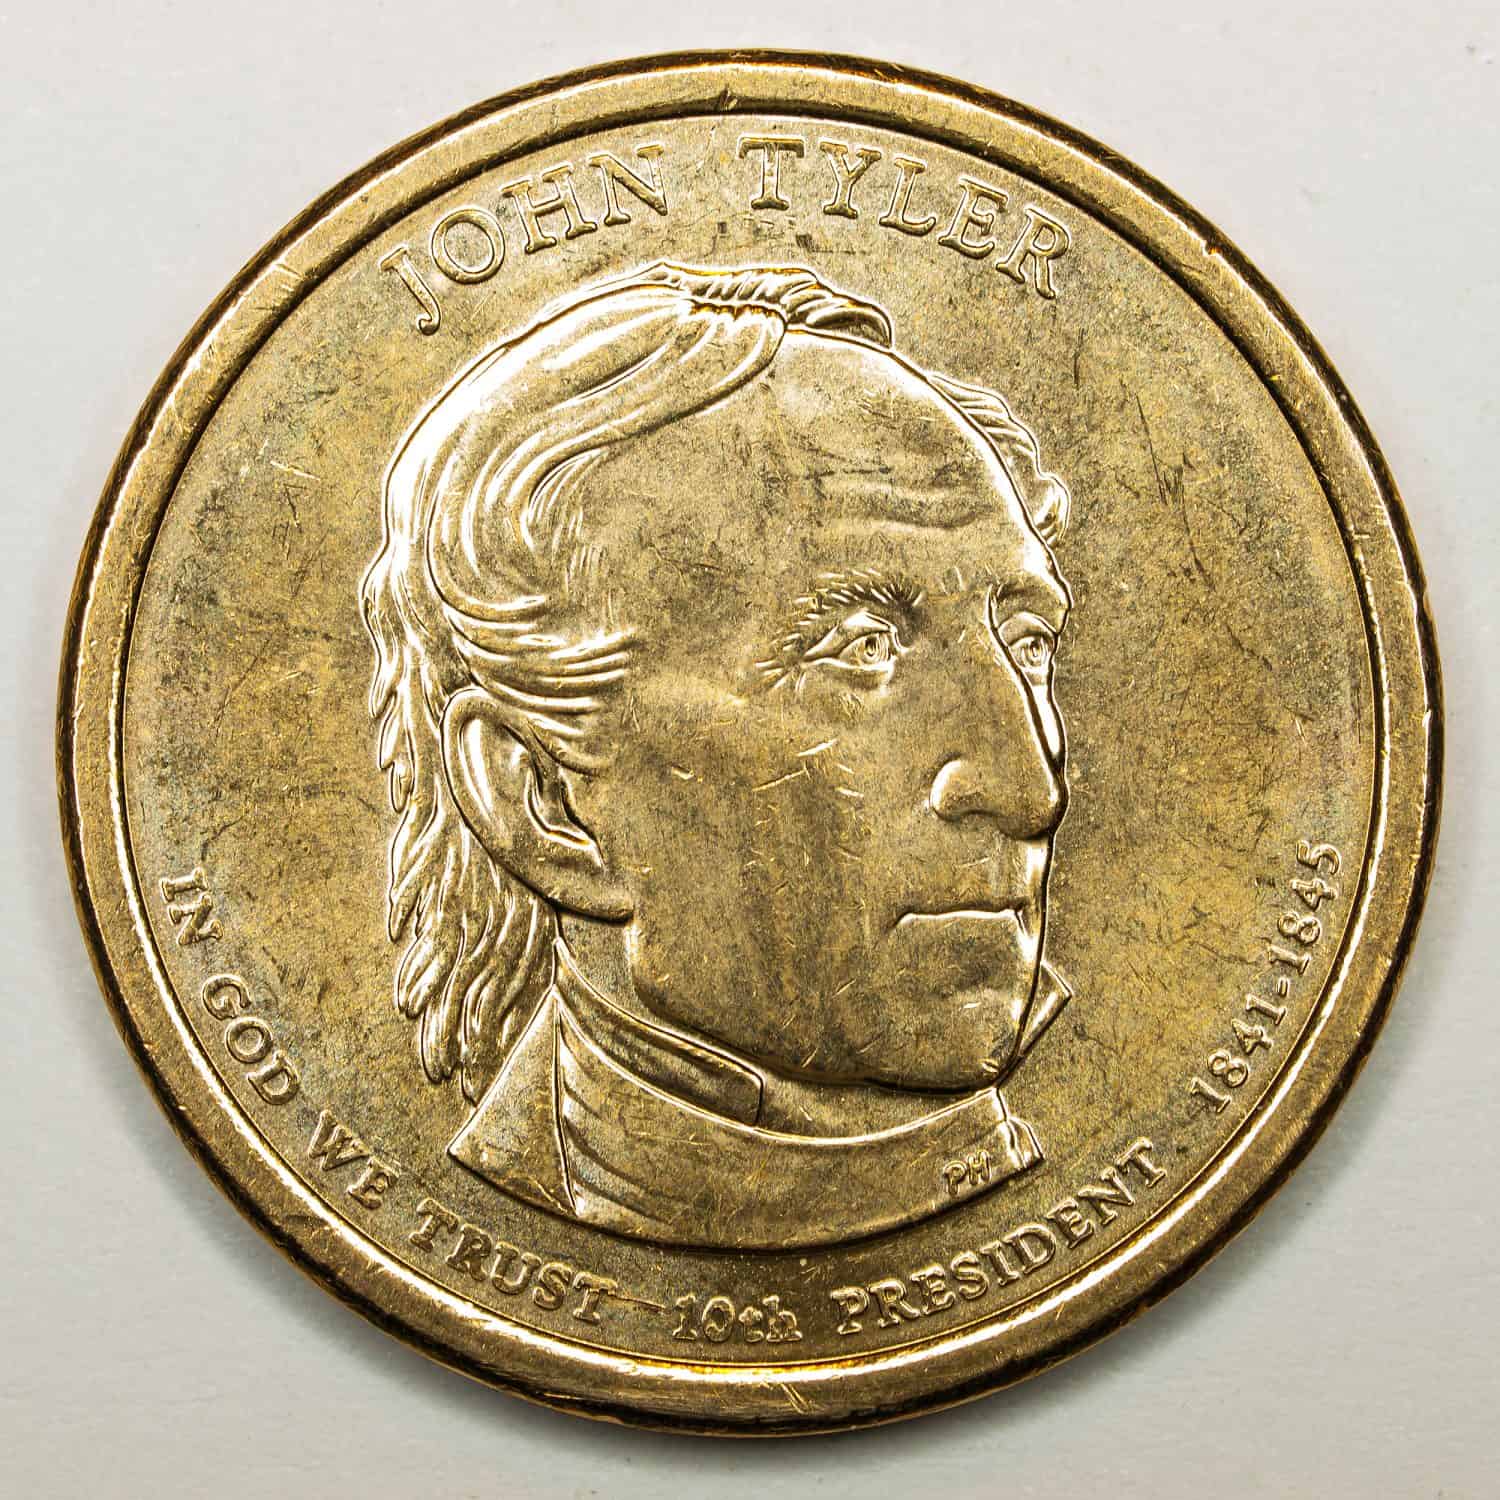 US Gold Presidential Dollar Featuring John Tyler